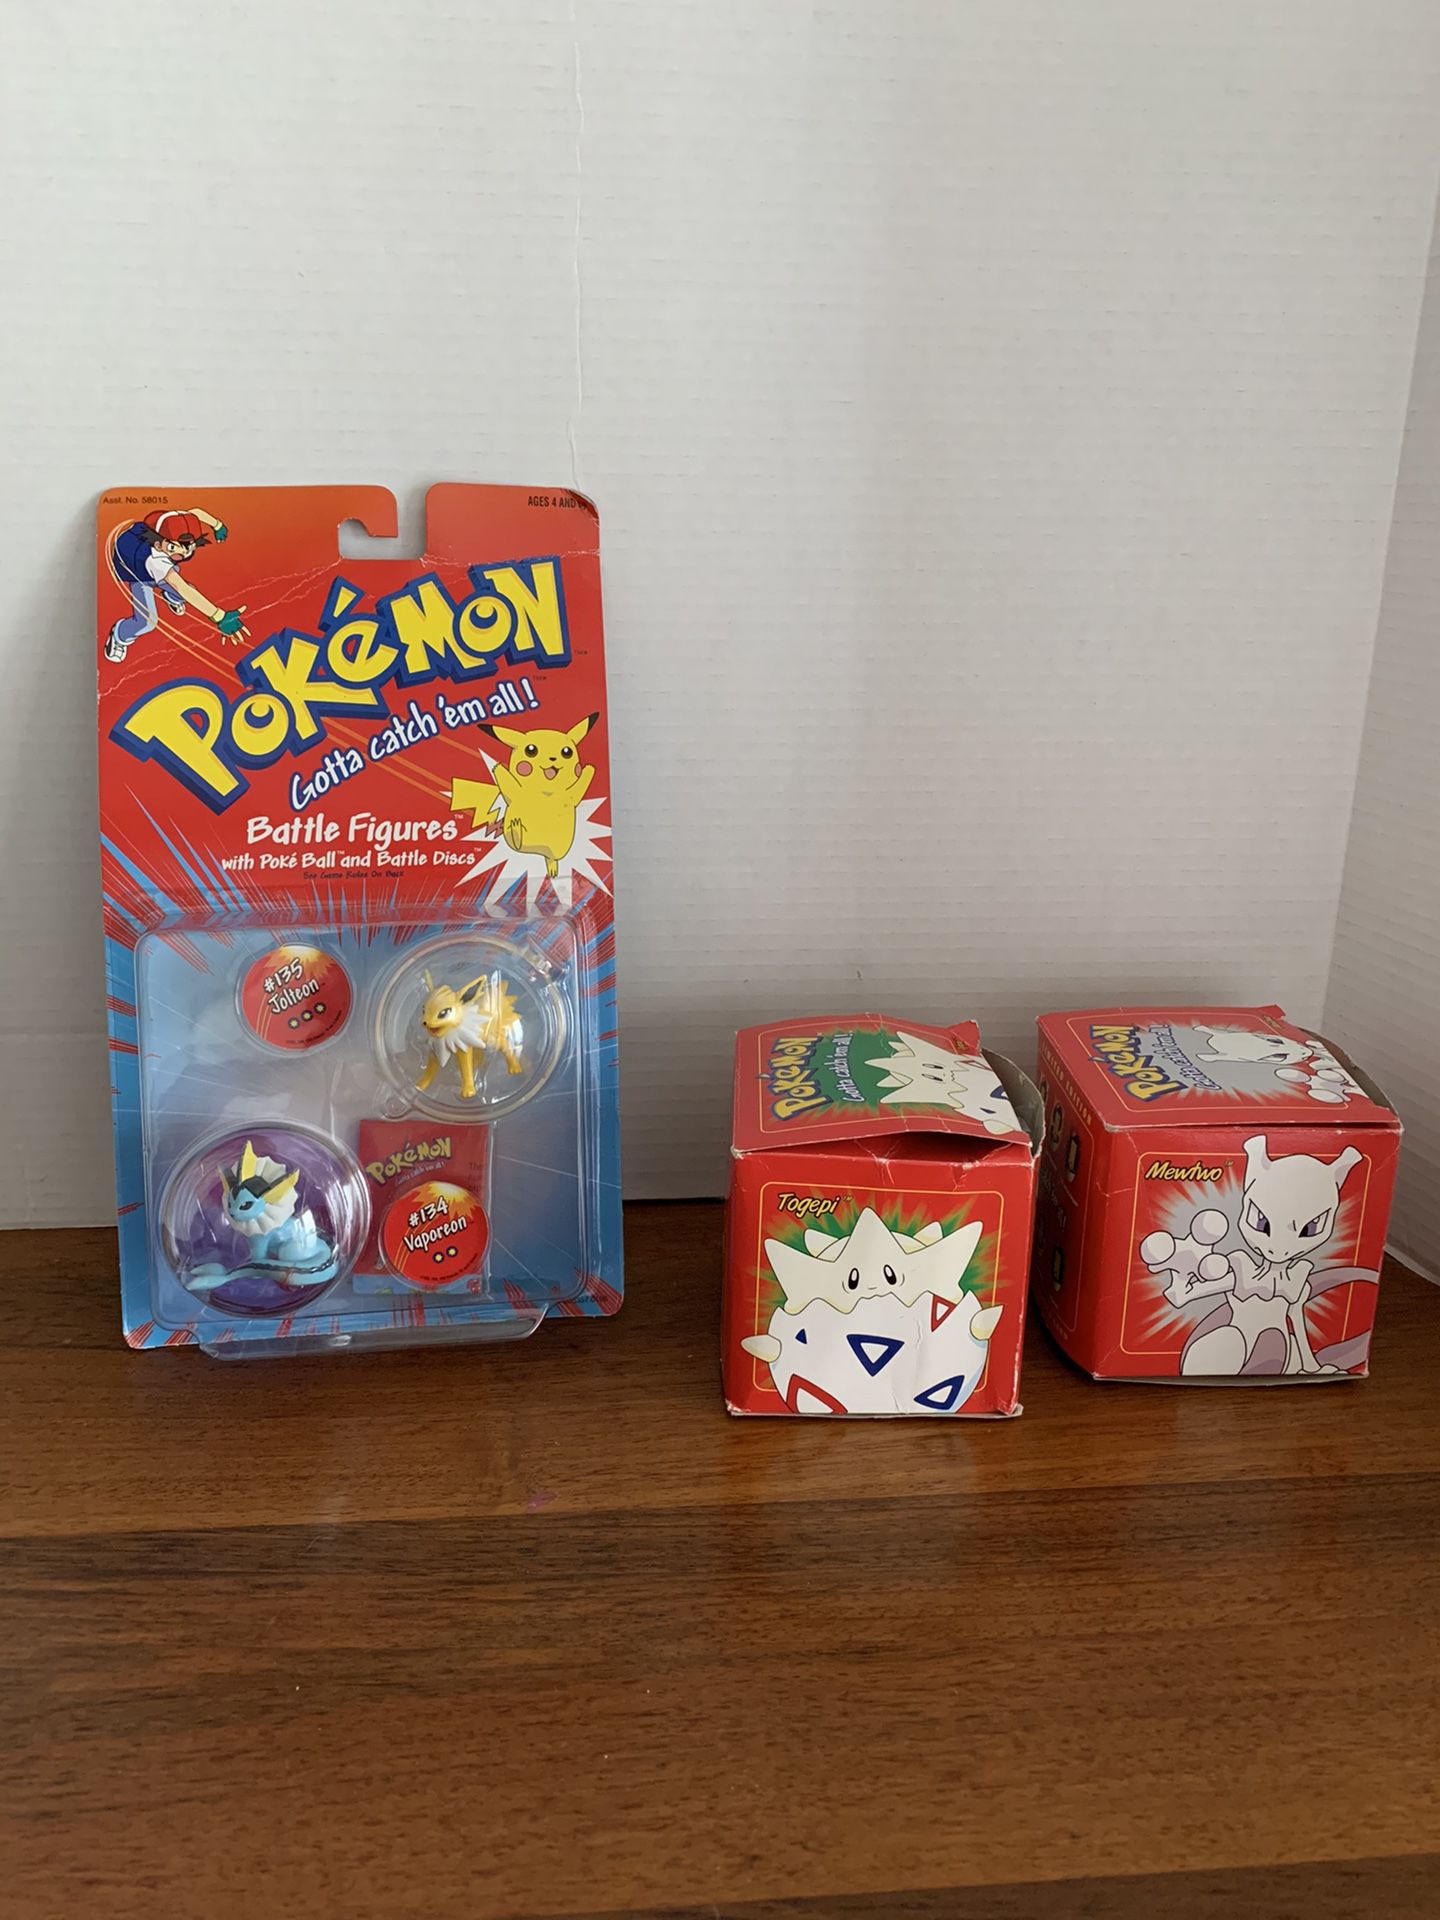 Pokémon toys